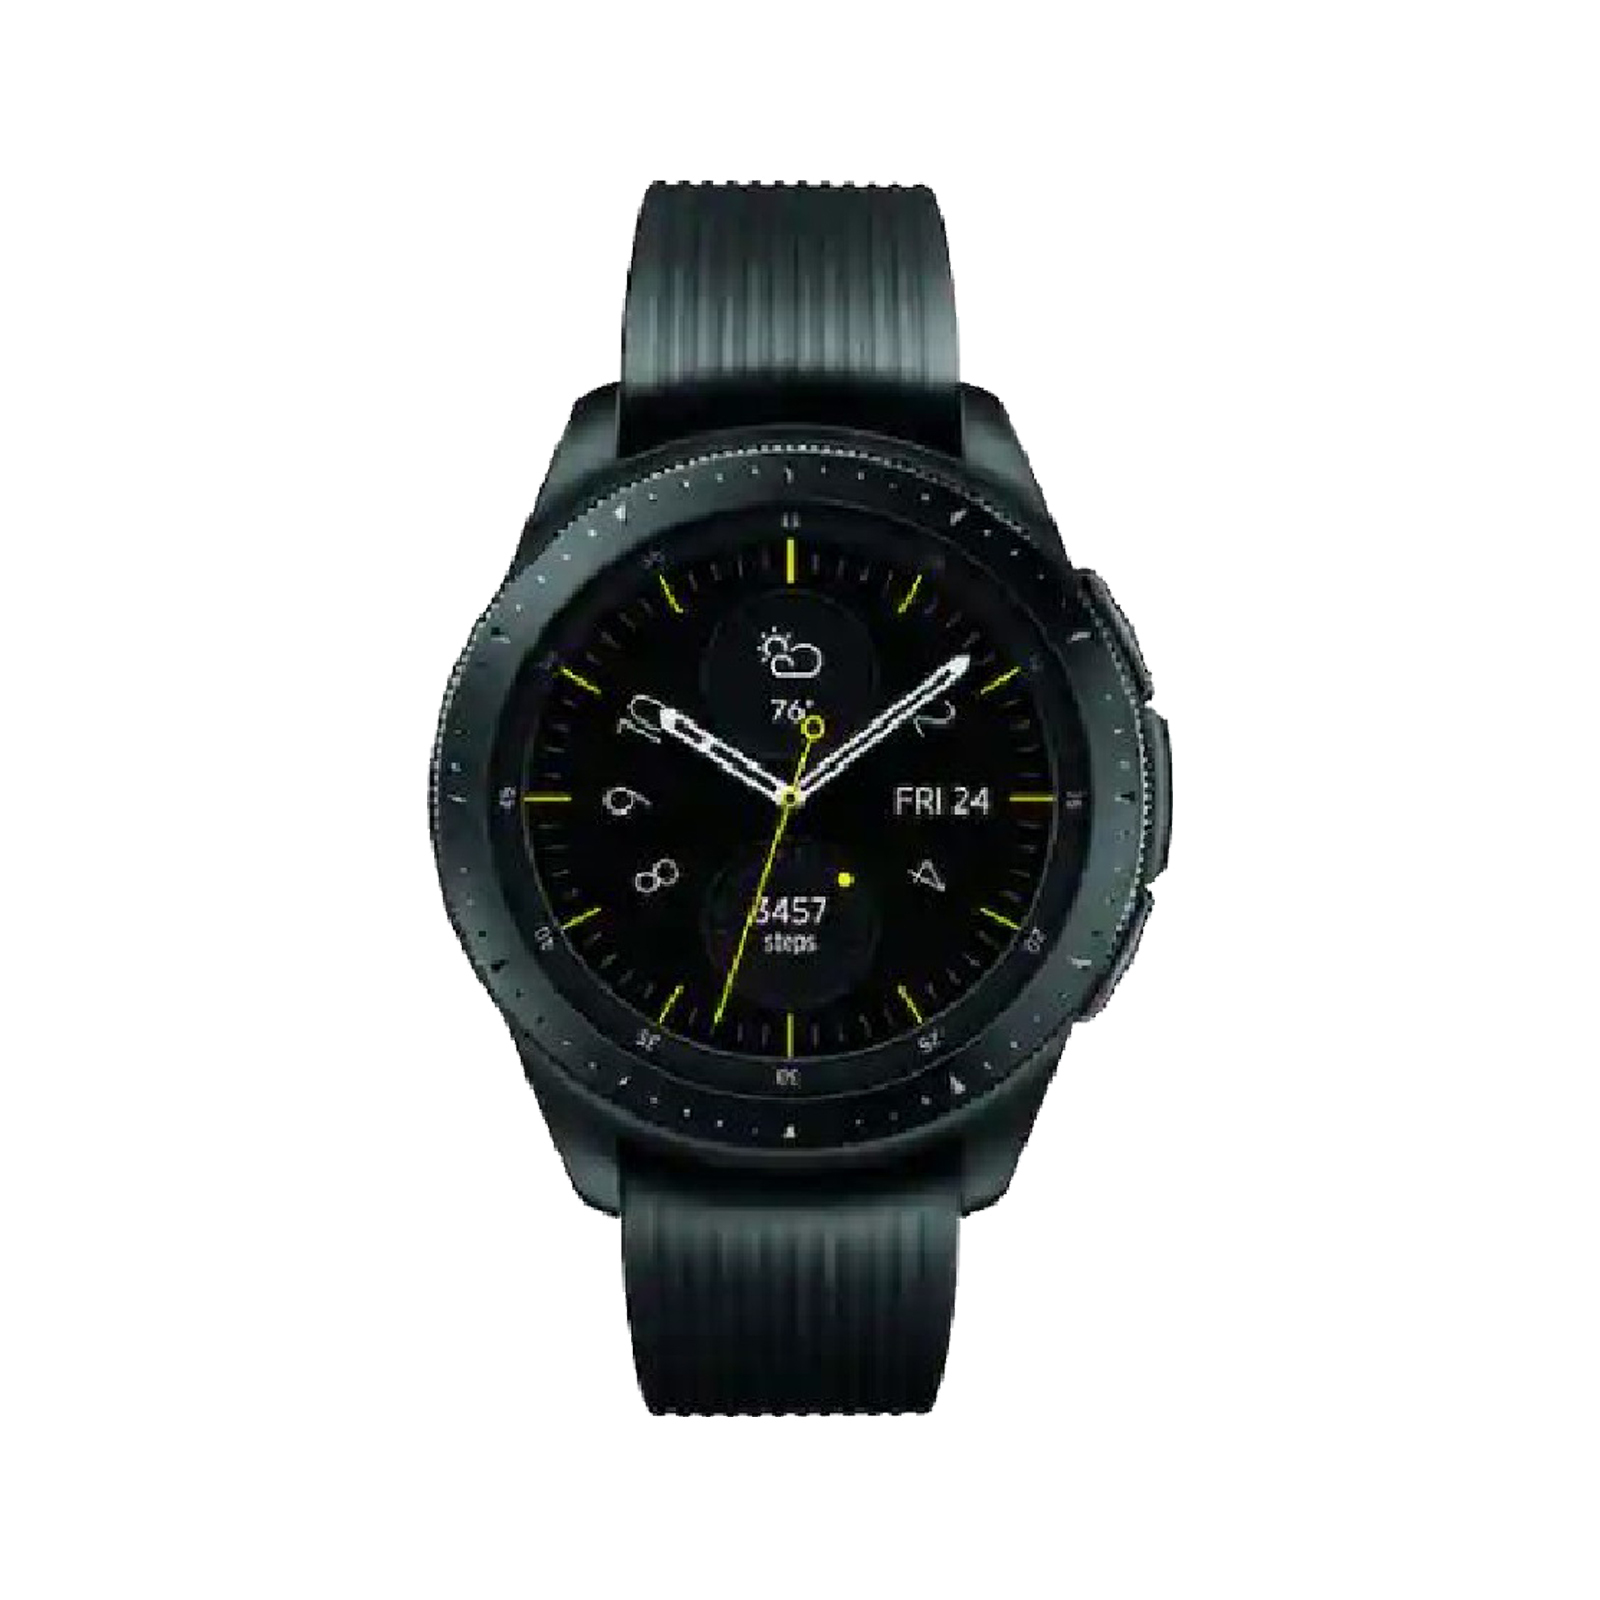 Samsung Galaxy Watch [Wi+Fi + Cellular] [42mm] [Black] [Excellent]